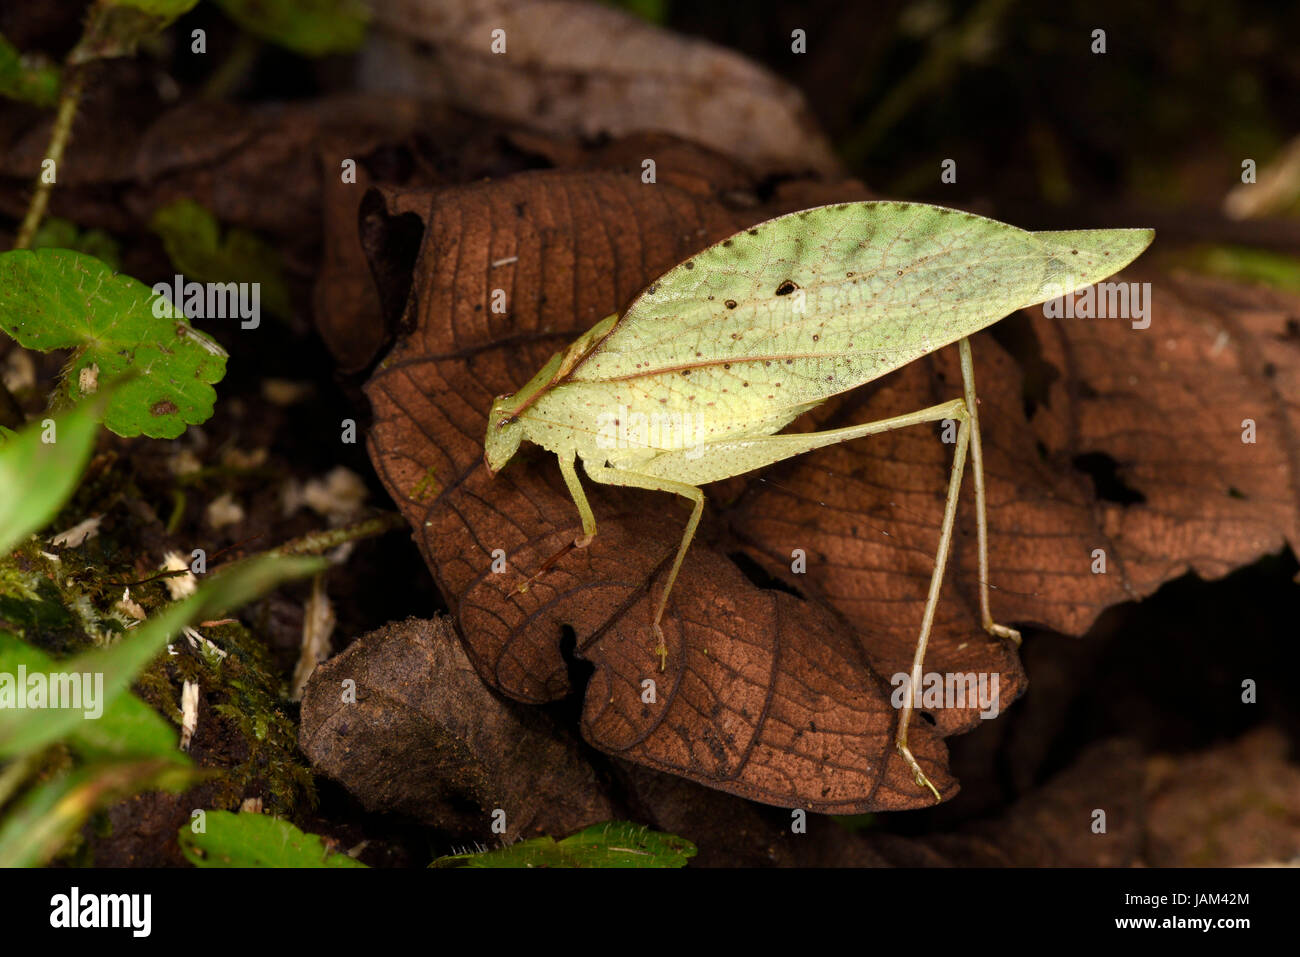 Bush Katydid, Orthoptera, Costa Rica, March Stock Photo